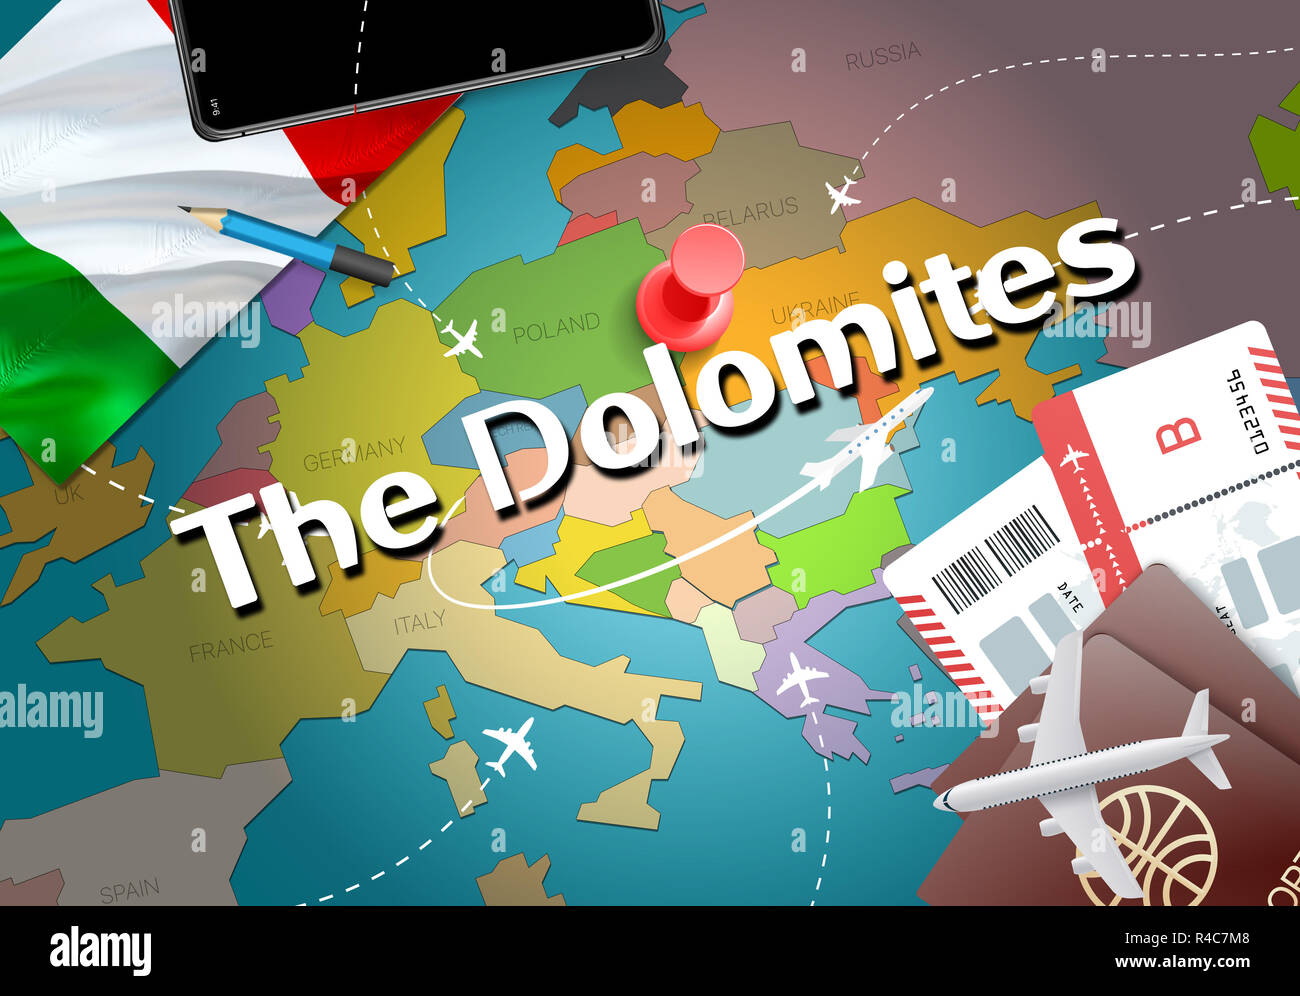 dolomites map